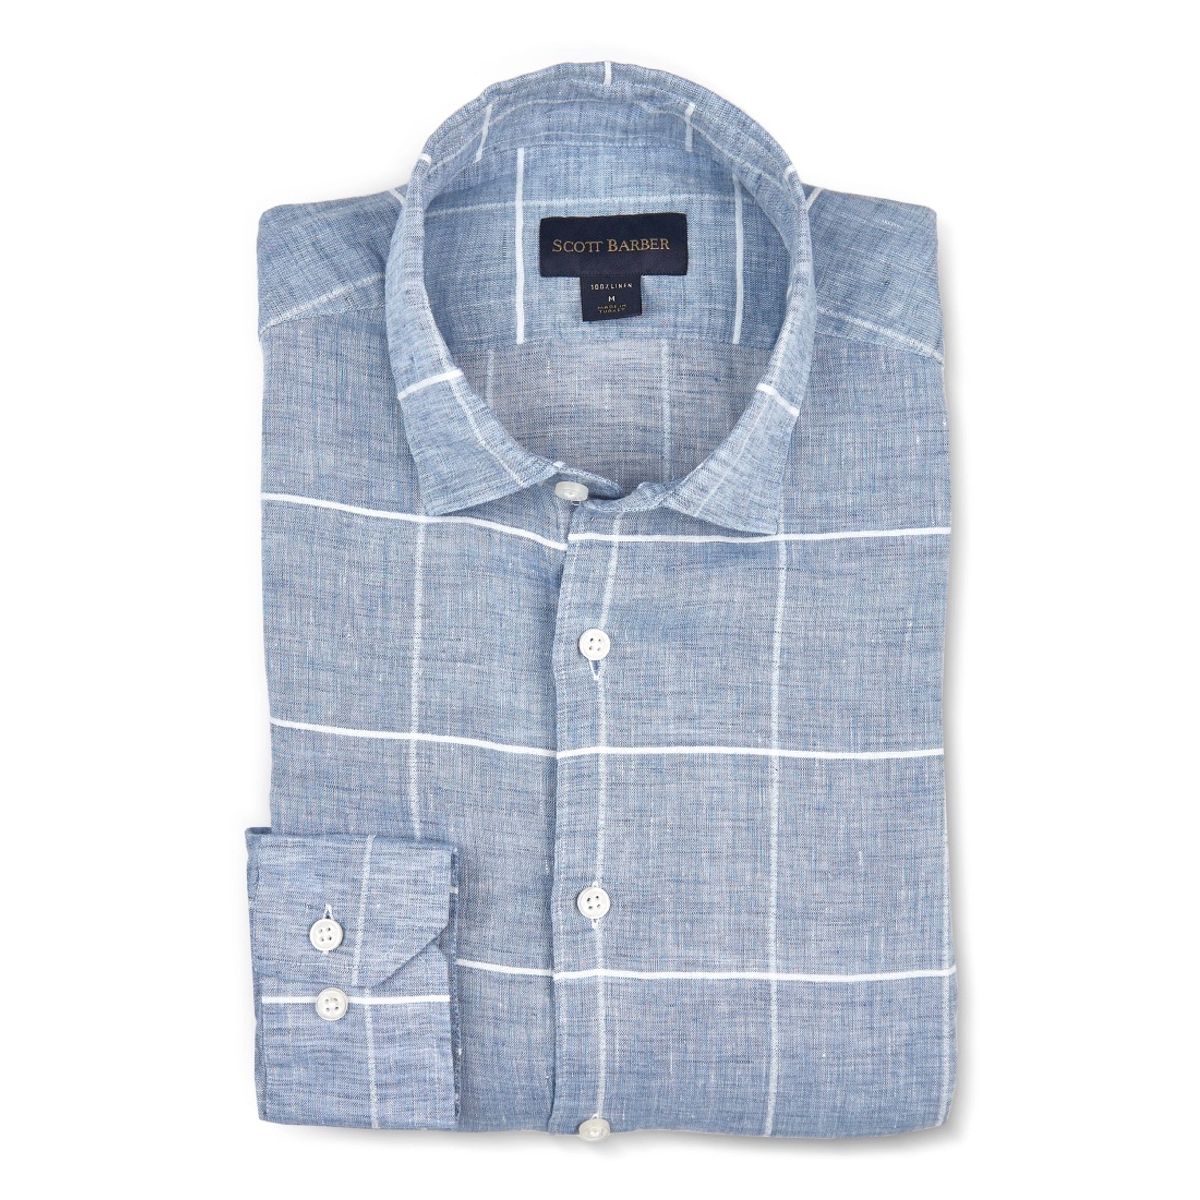 Linen Plaid Long Sleeve Sport Shirt with Hidden Button Down Collar in Chambray Blue by Scott Barber